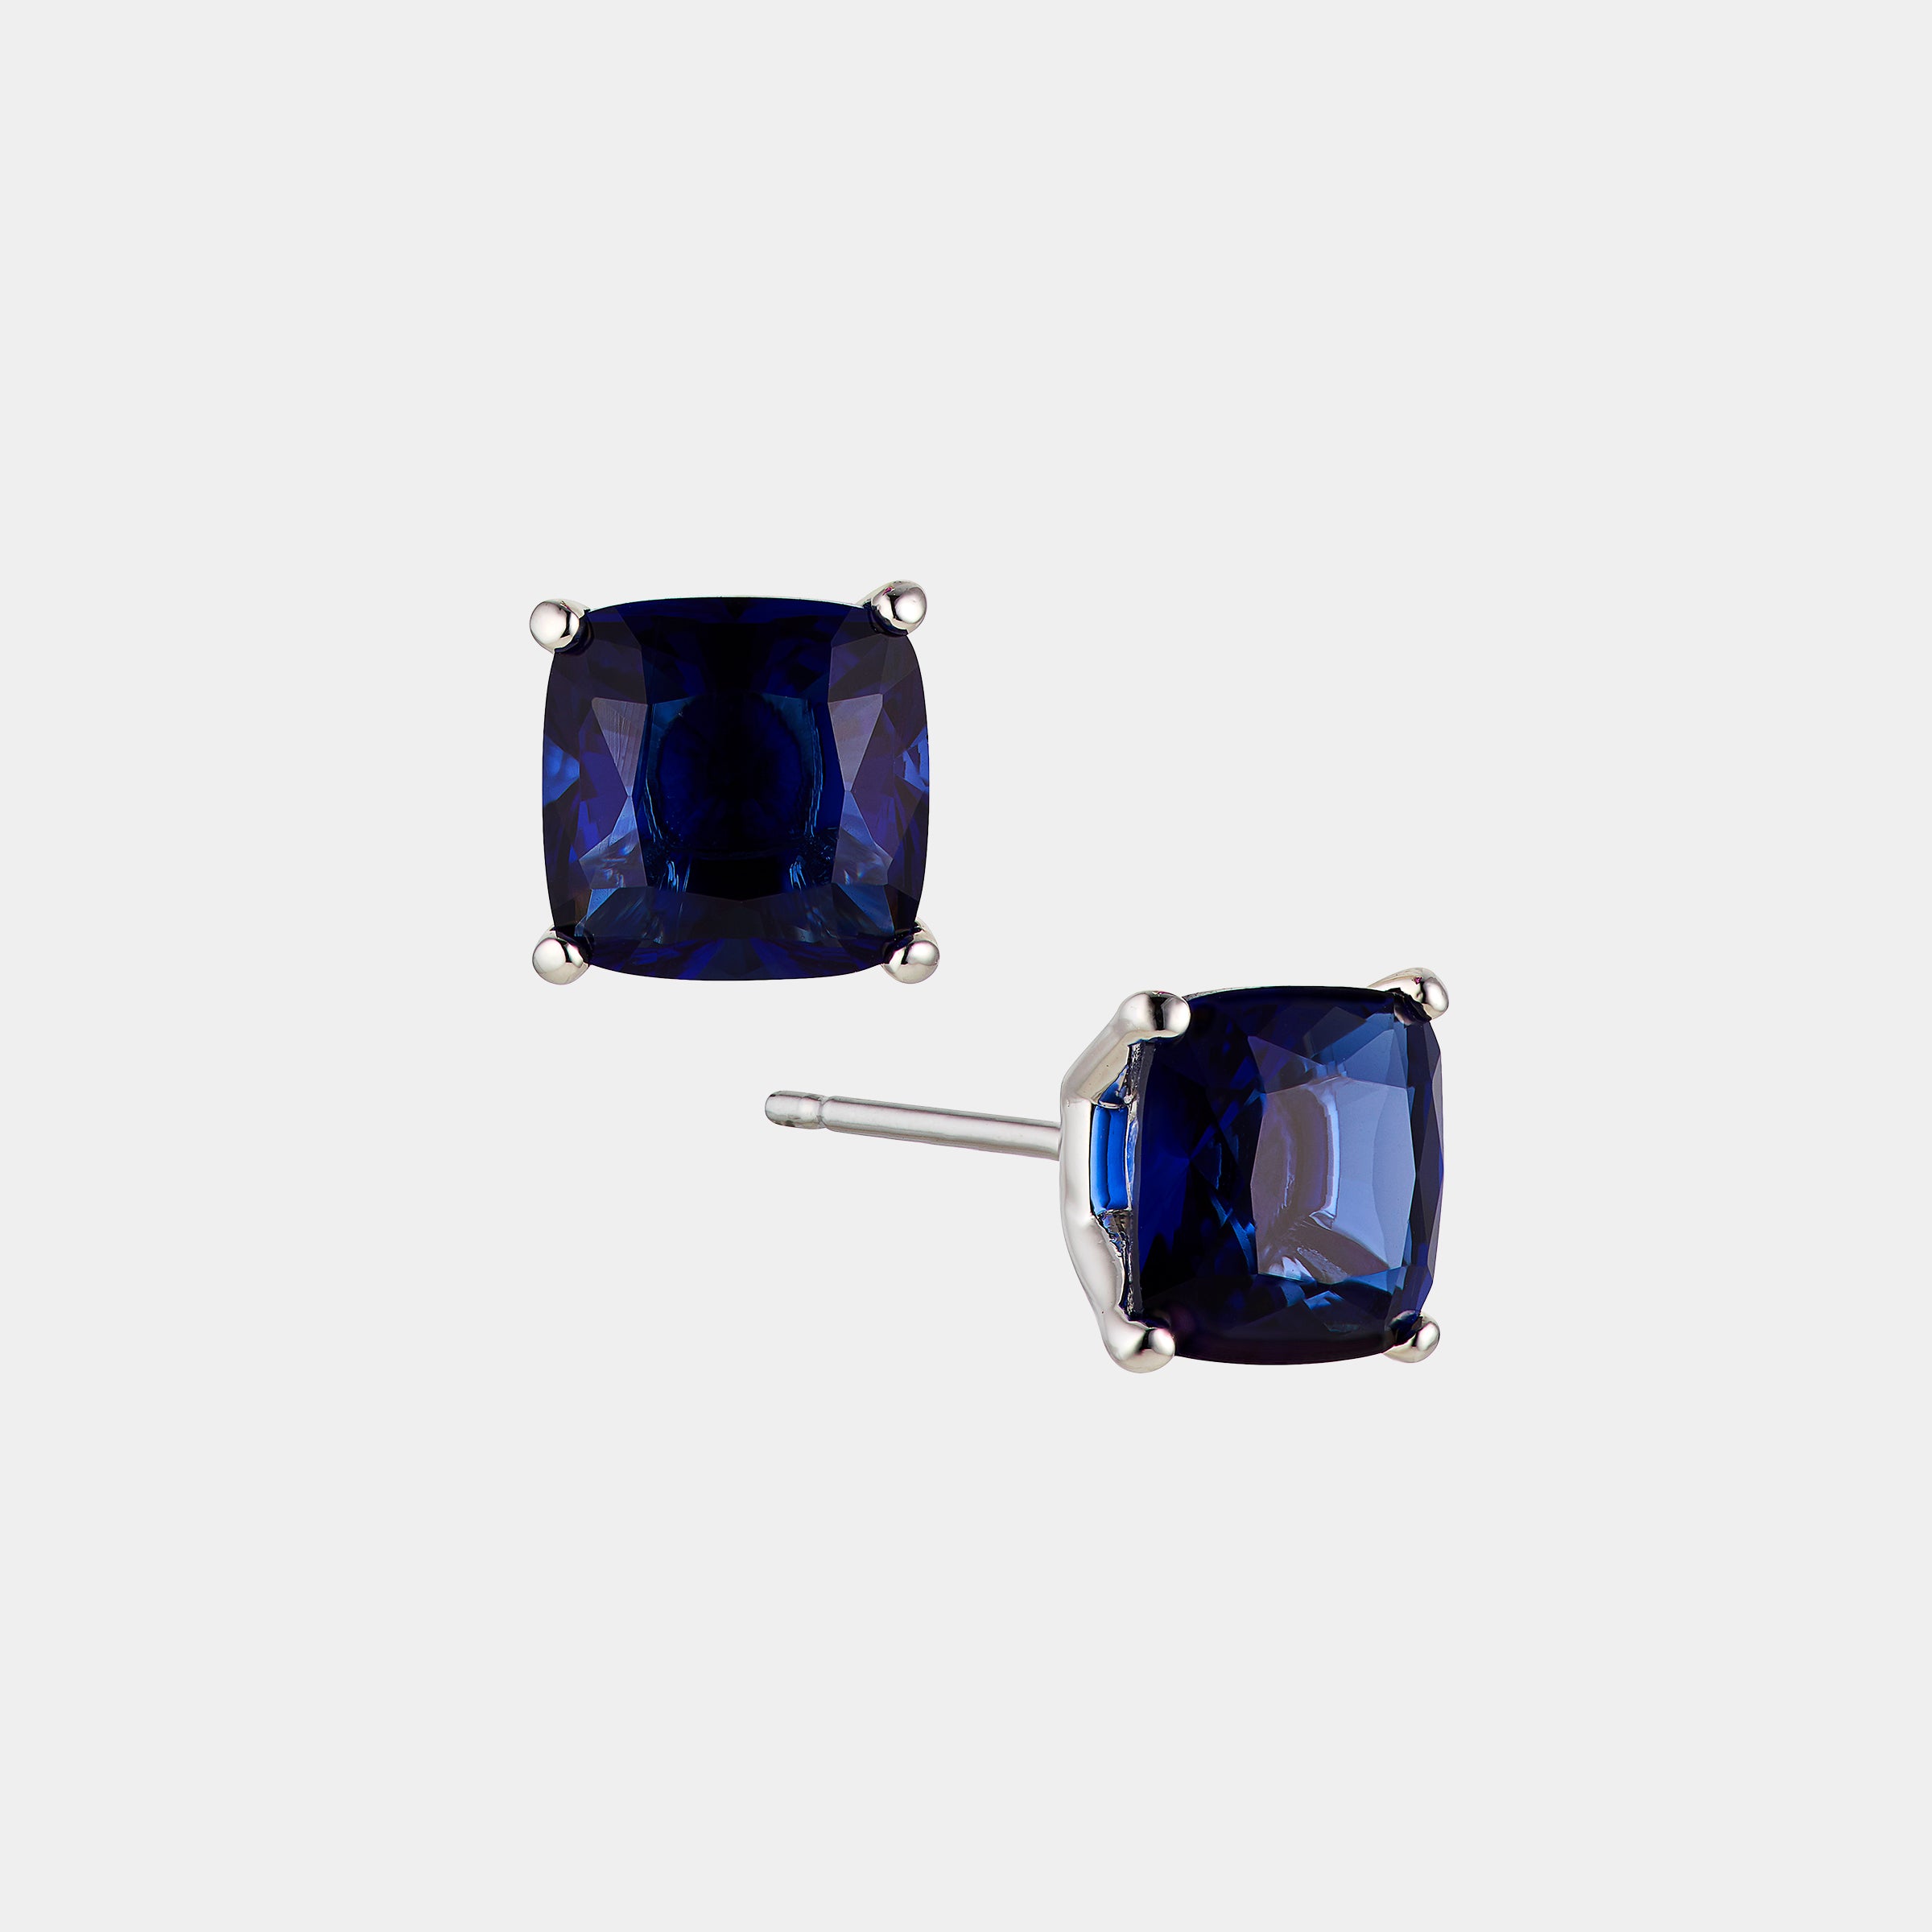 6ct Square Cut Diamond Earrings | 1stdibs.com | Diamond earrings studs,  Vintage drop earrings, Jewelry